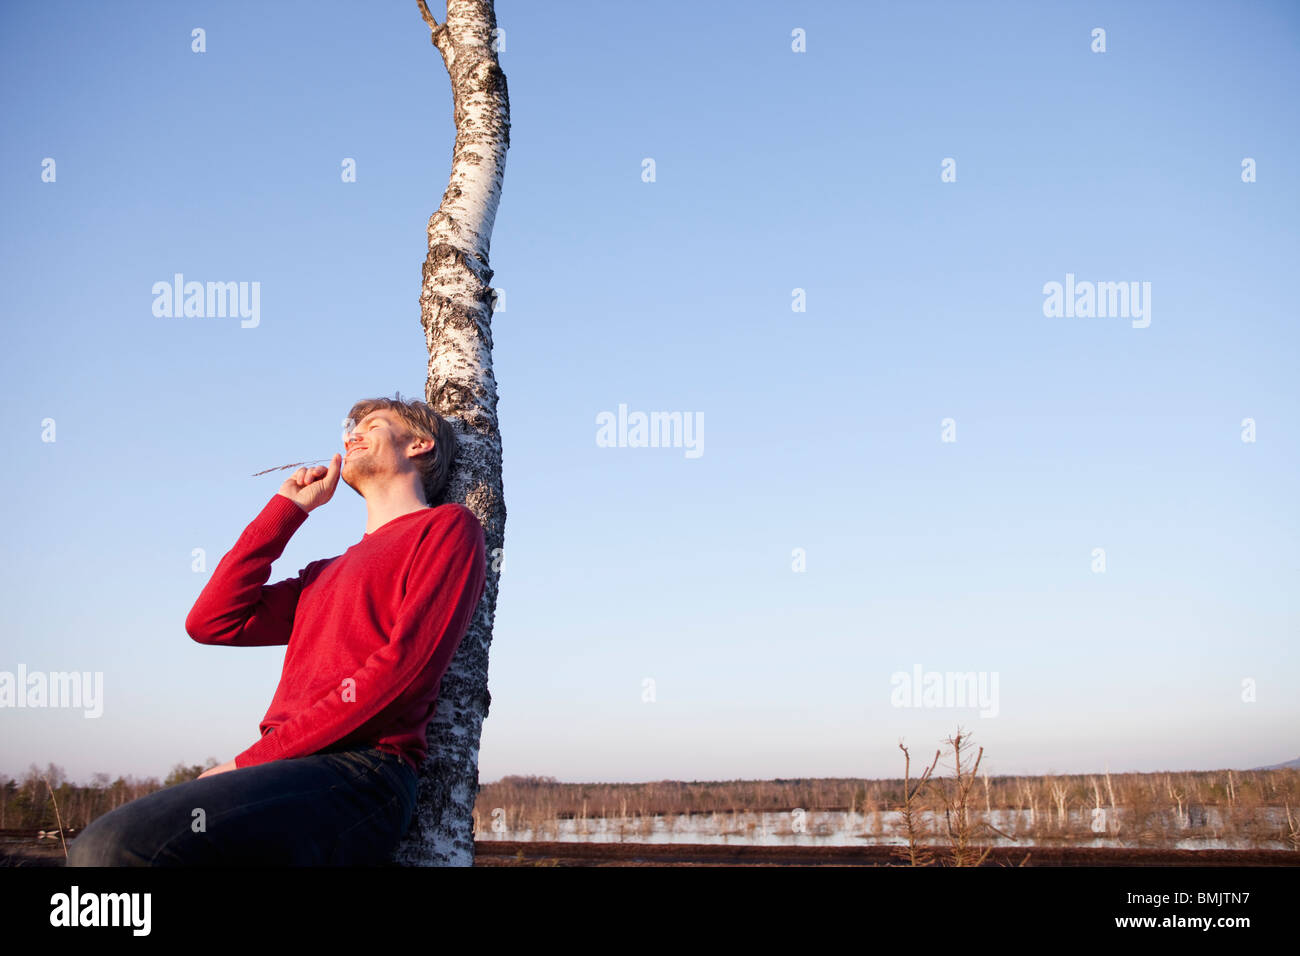 Man leaning back on tree Stock Photo